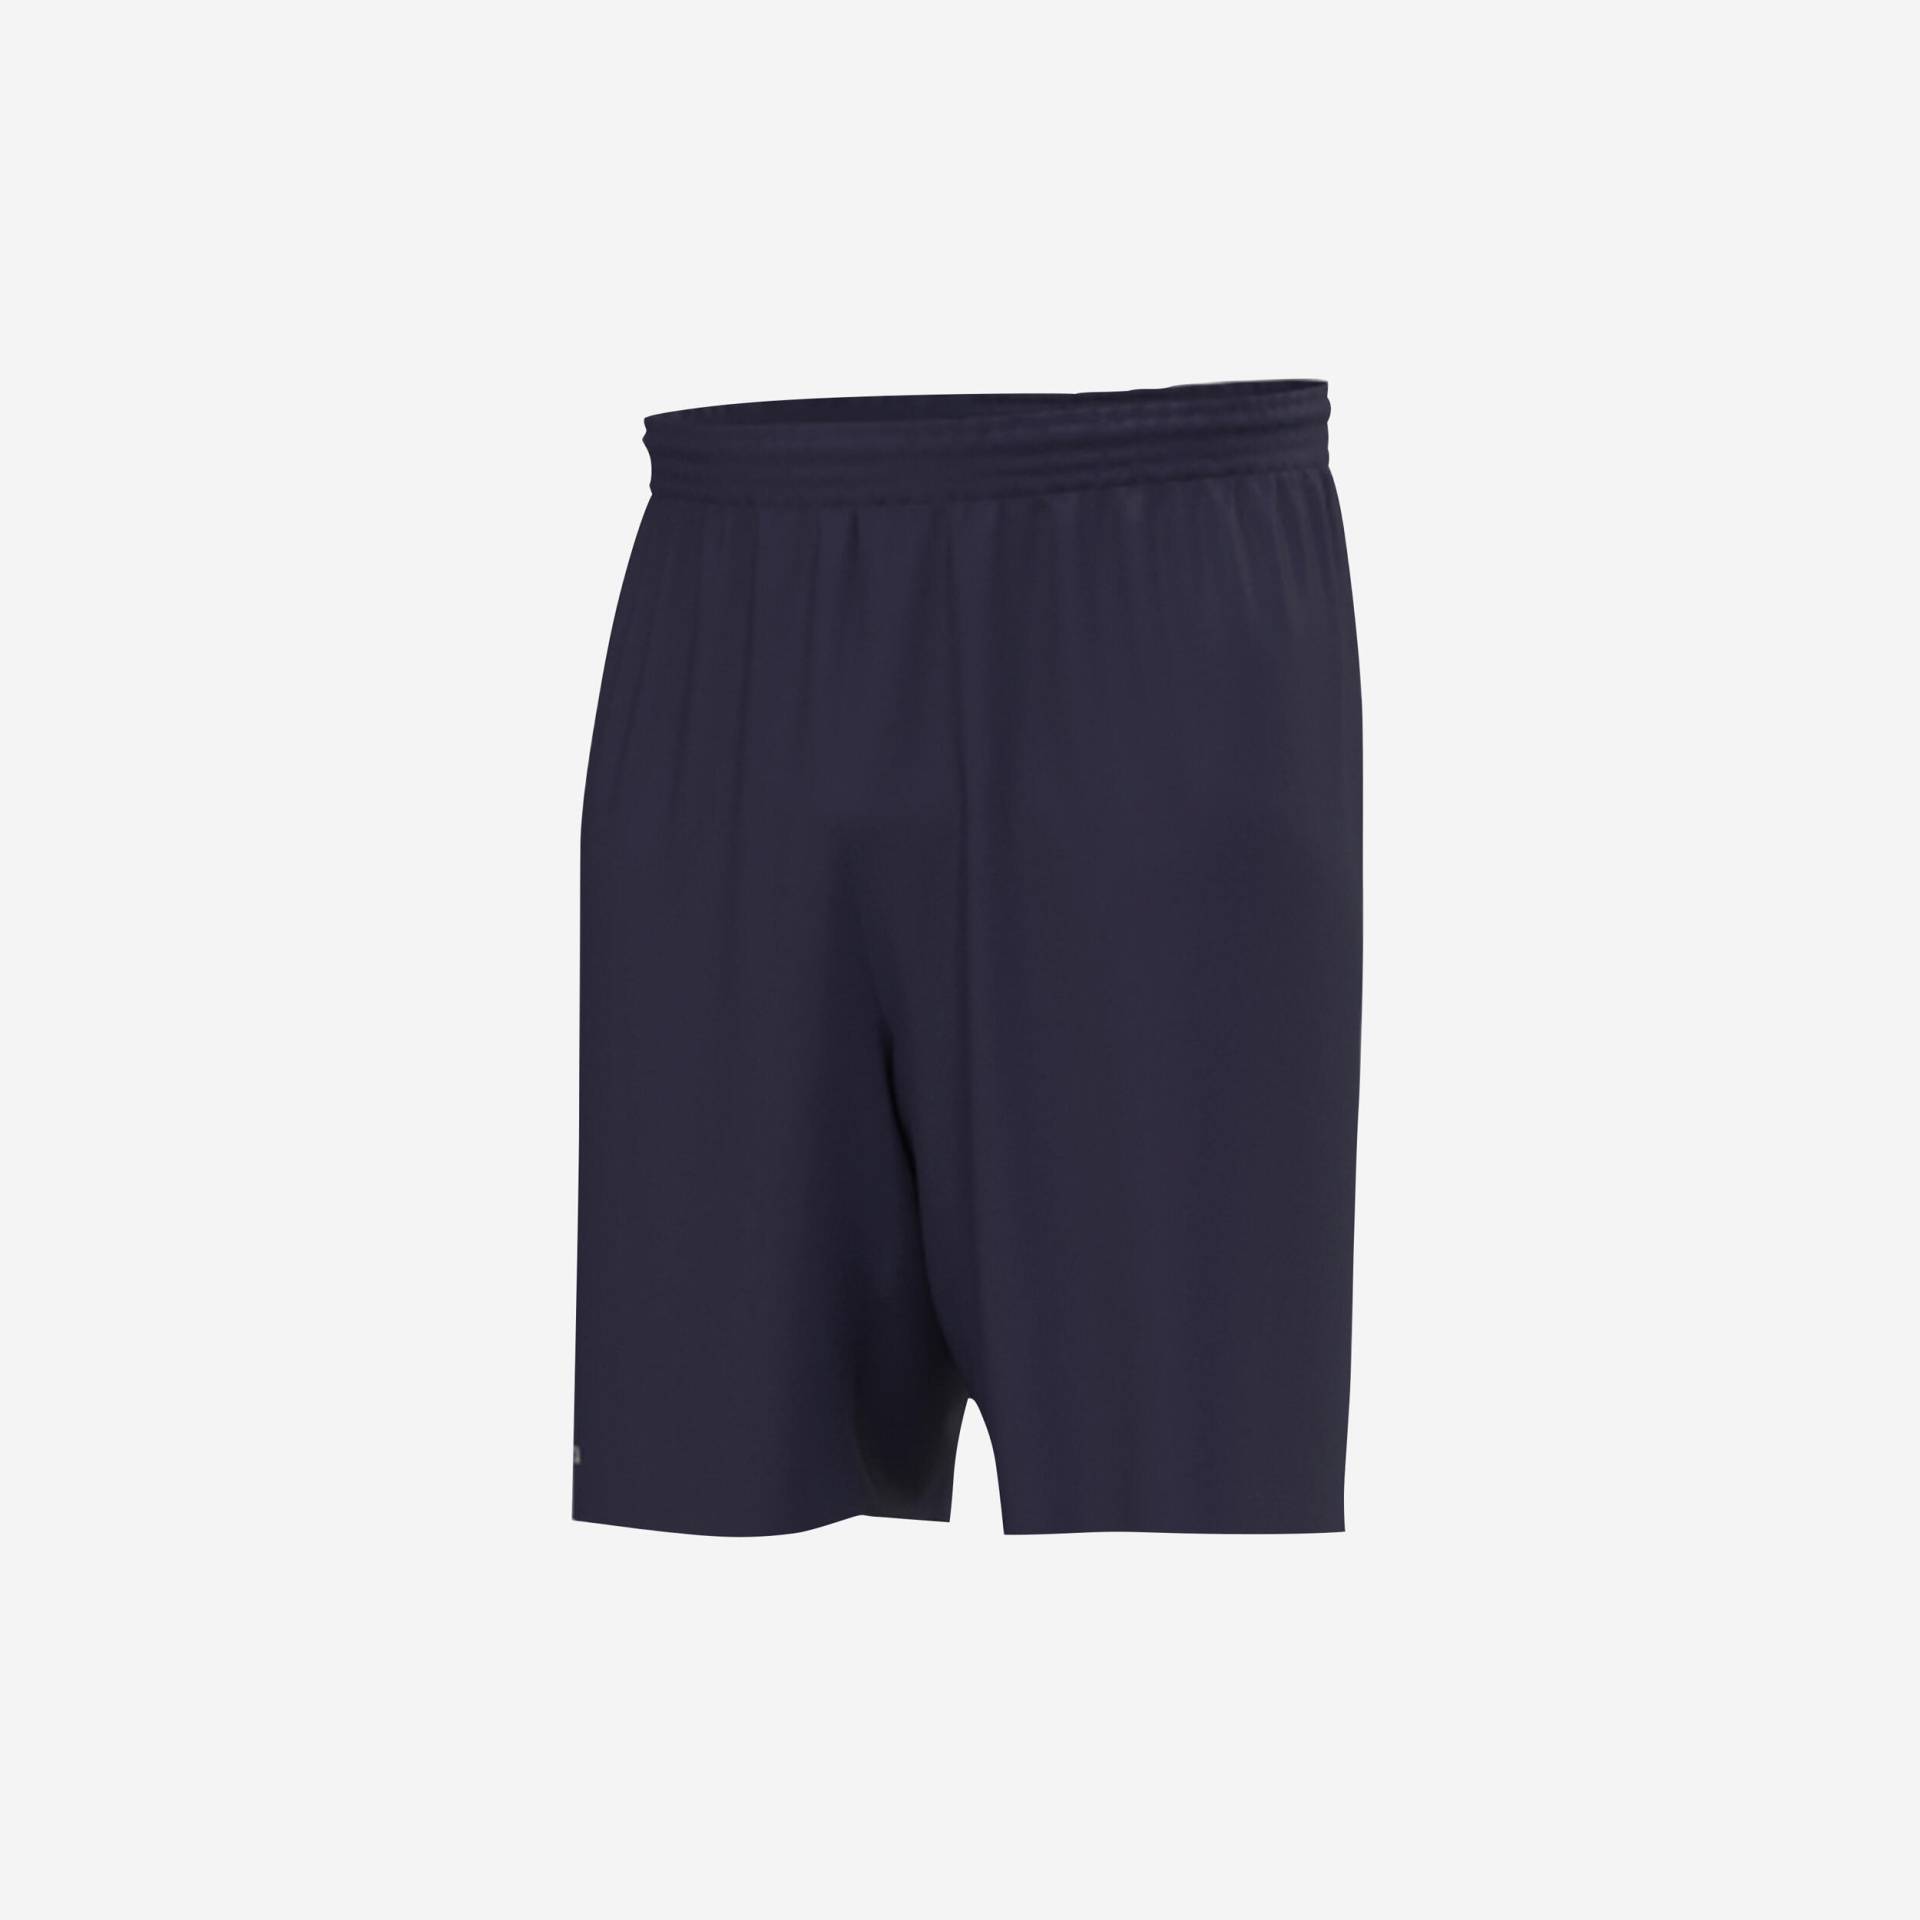 Damen/Herren Fussball Shorts - F100 marineblau von KIPSTA